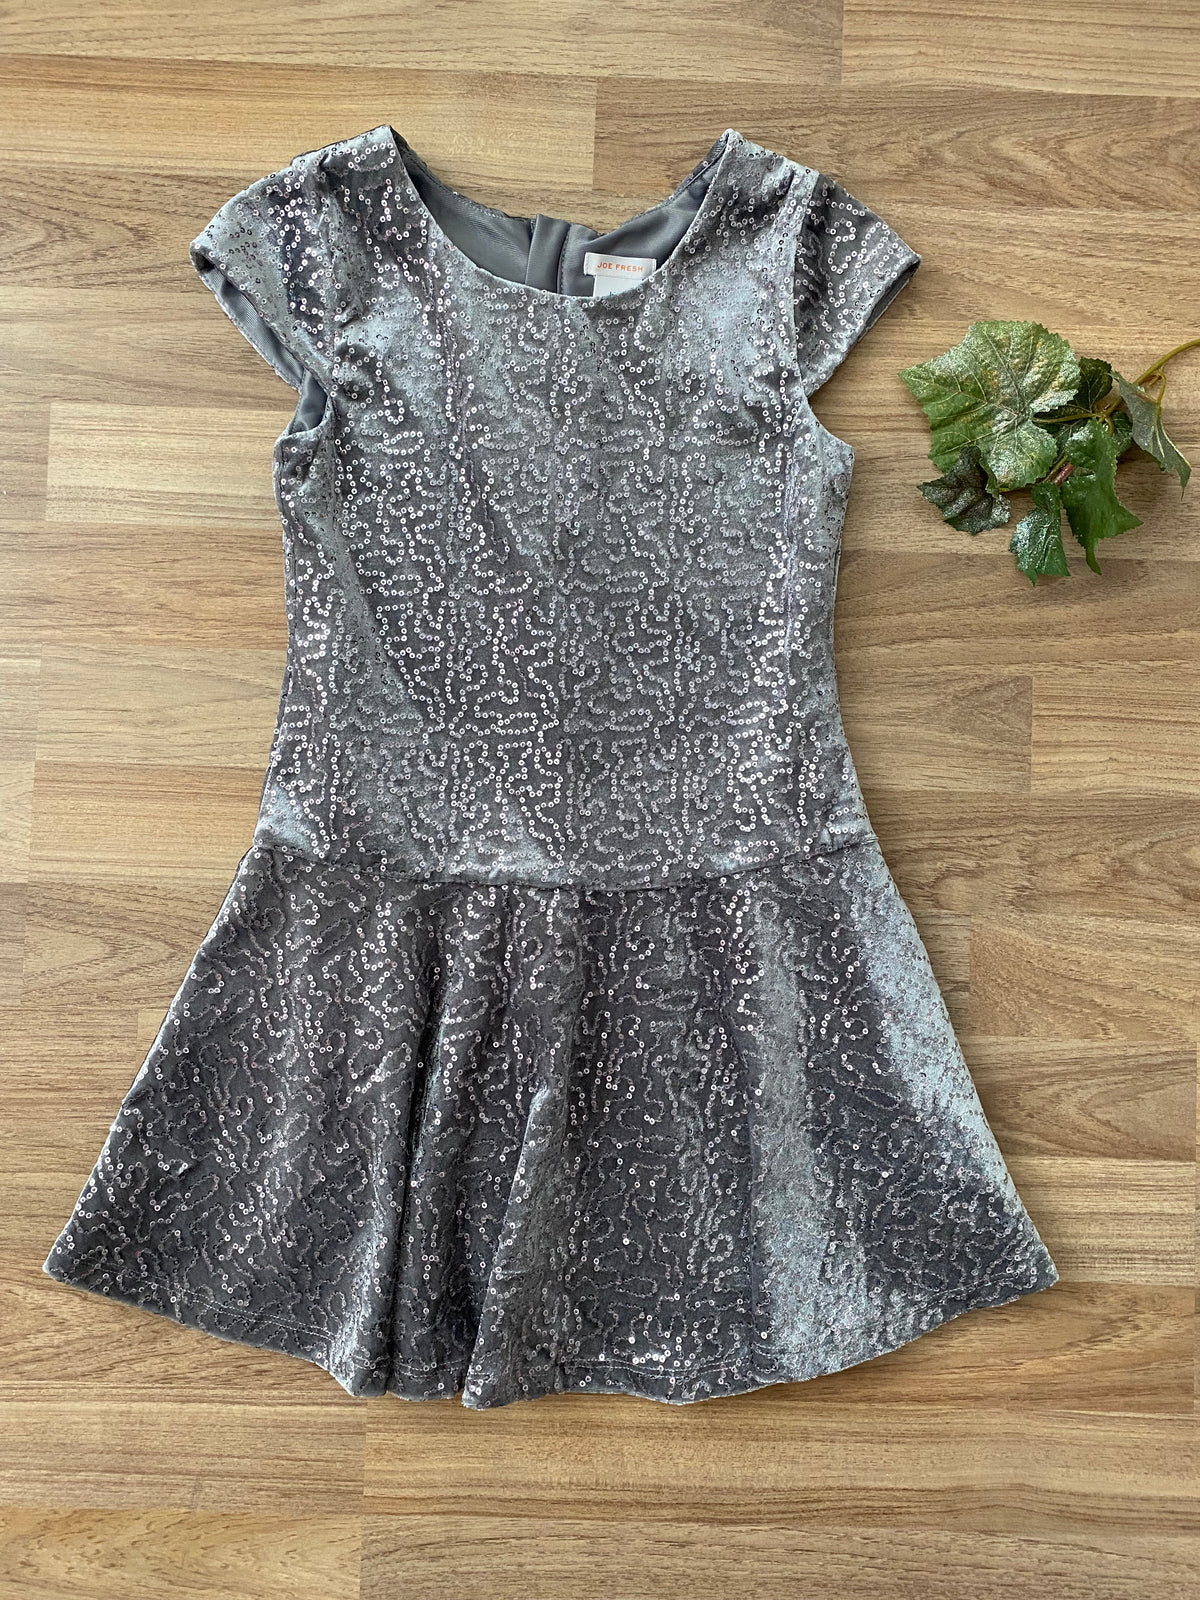 Dress (Girls Size 8)